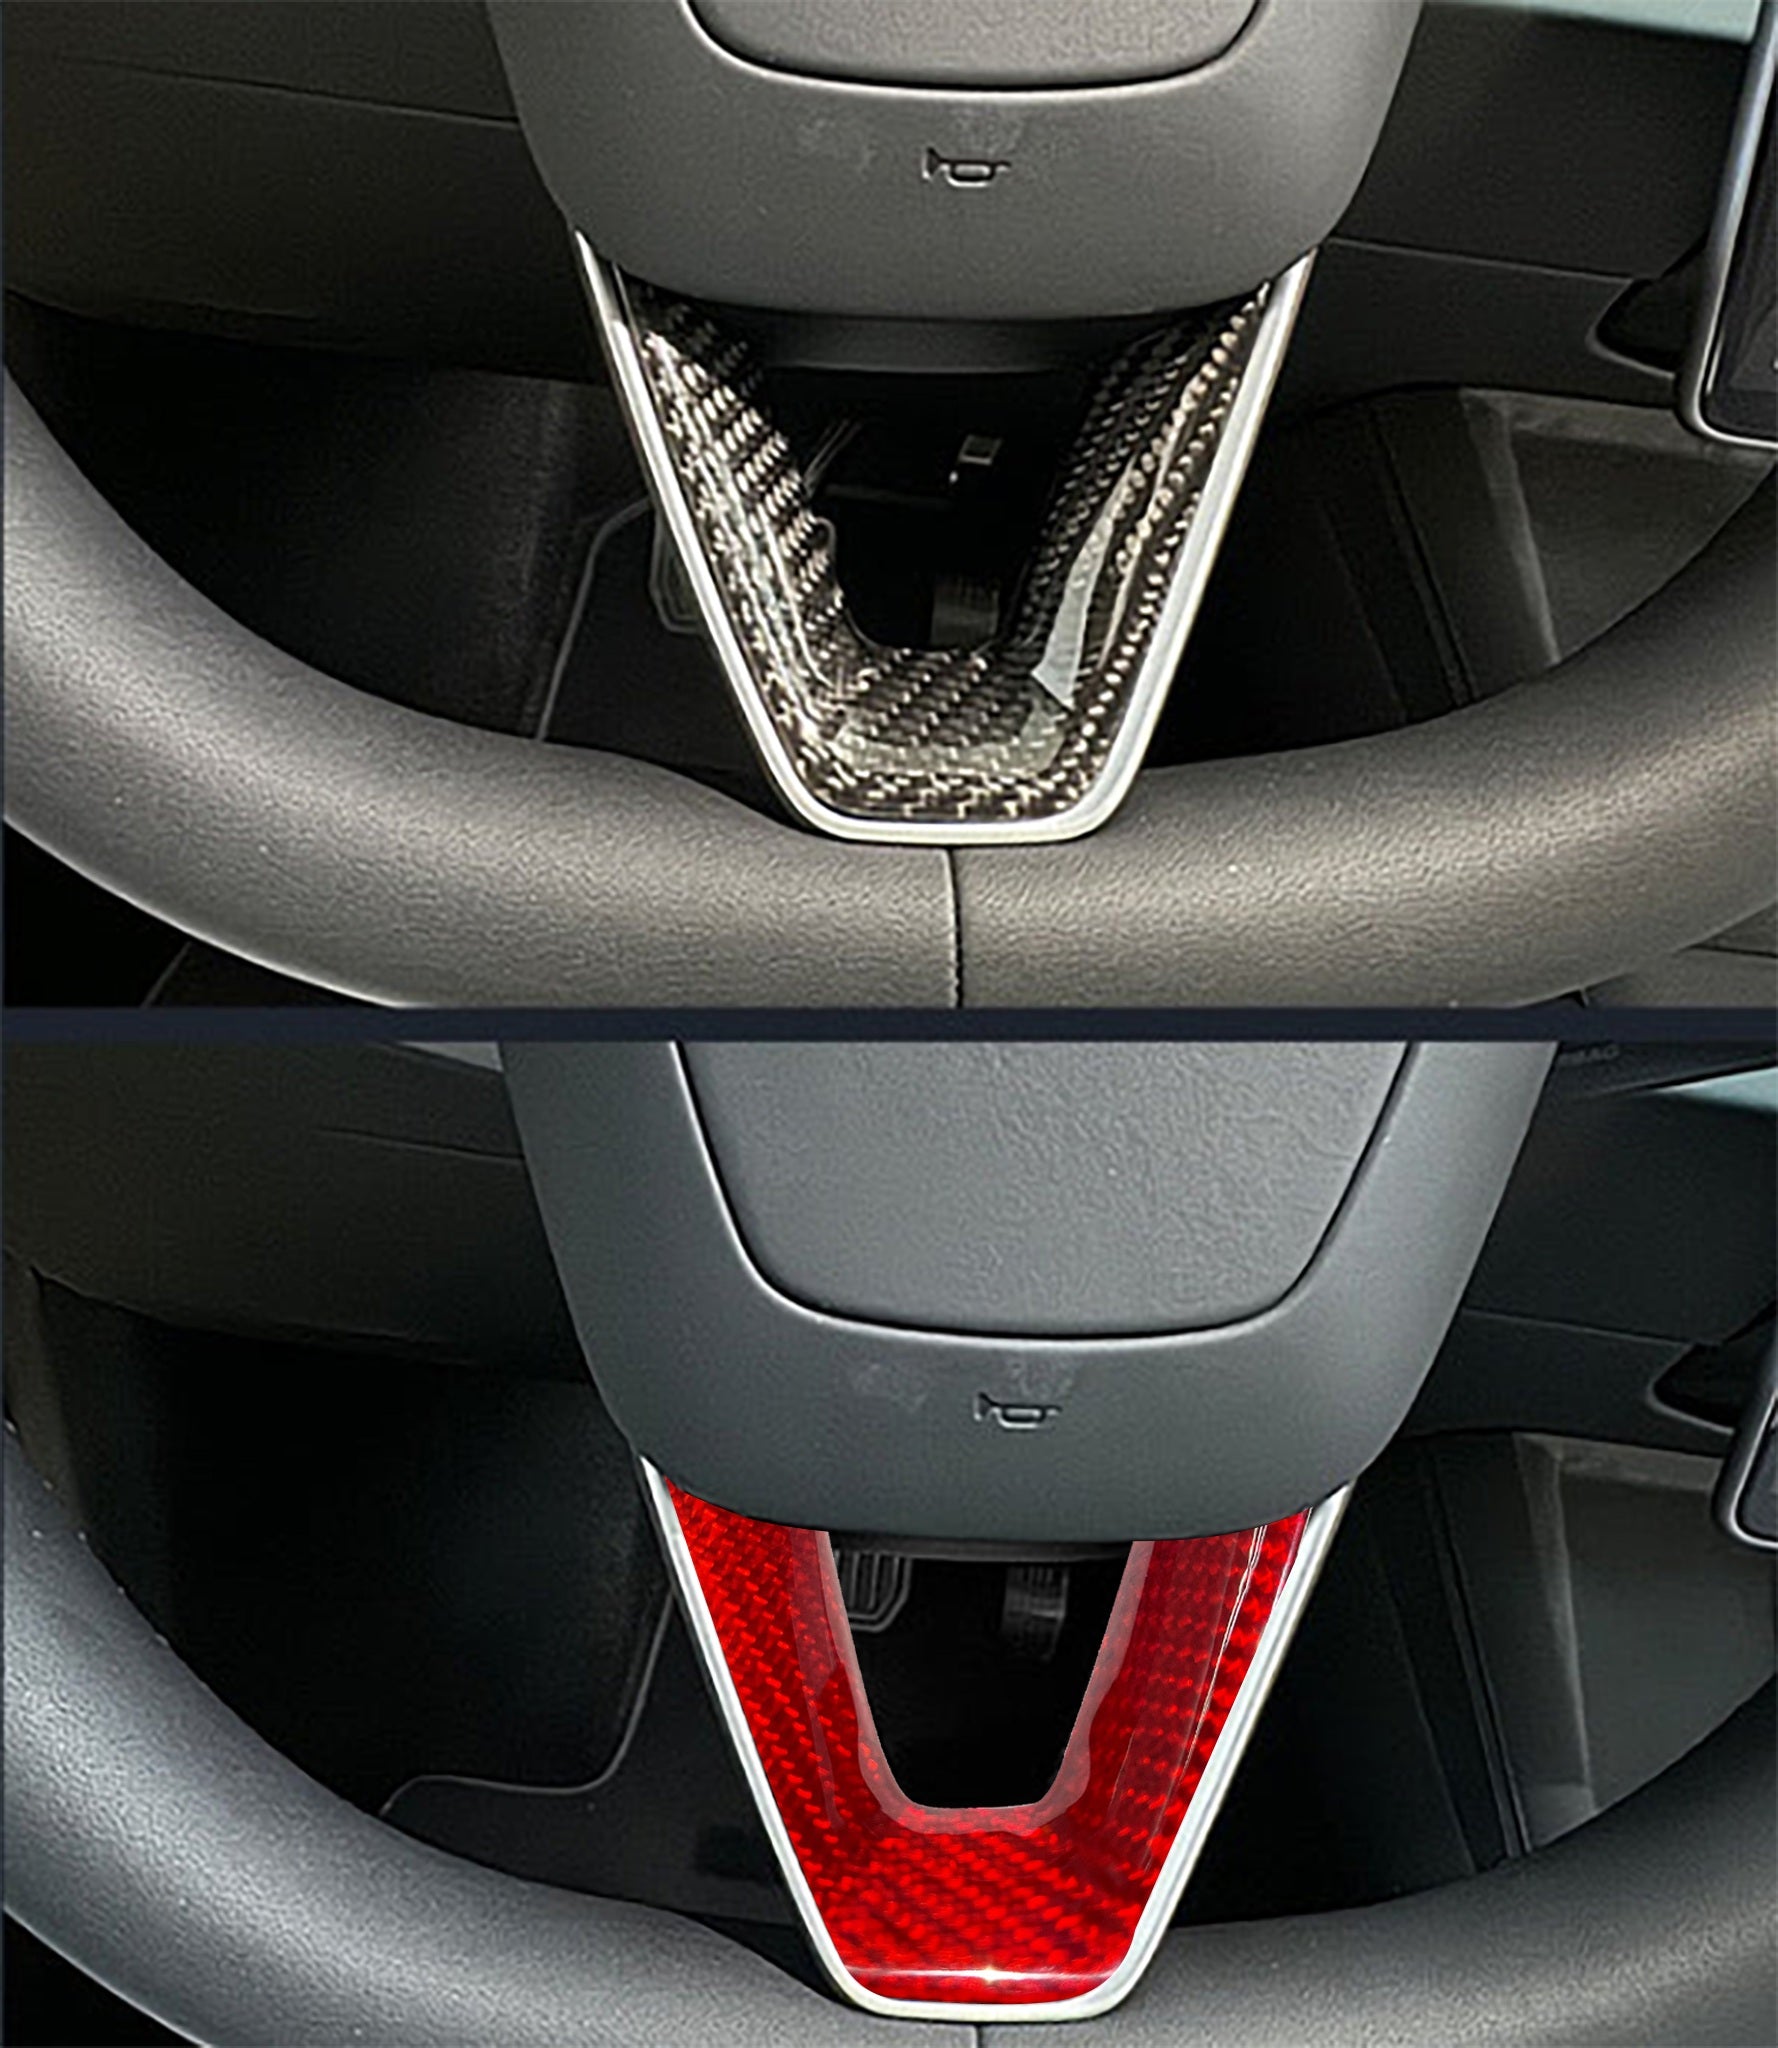 Real Carbon Fiber Steering Wheel Cover for Tesla Model 3/Y – Yeslak